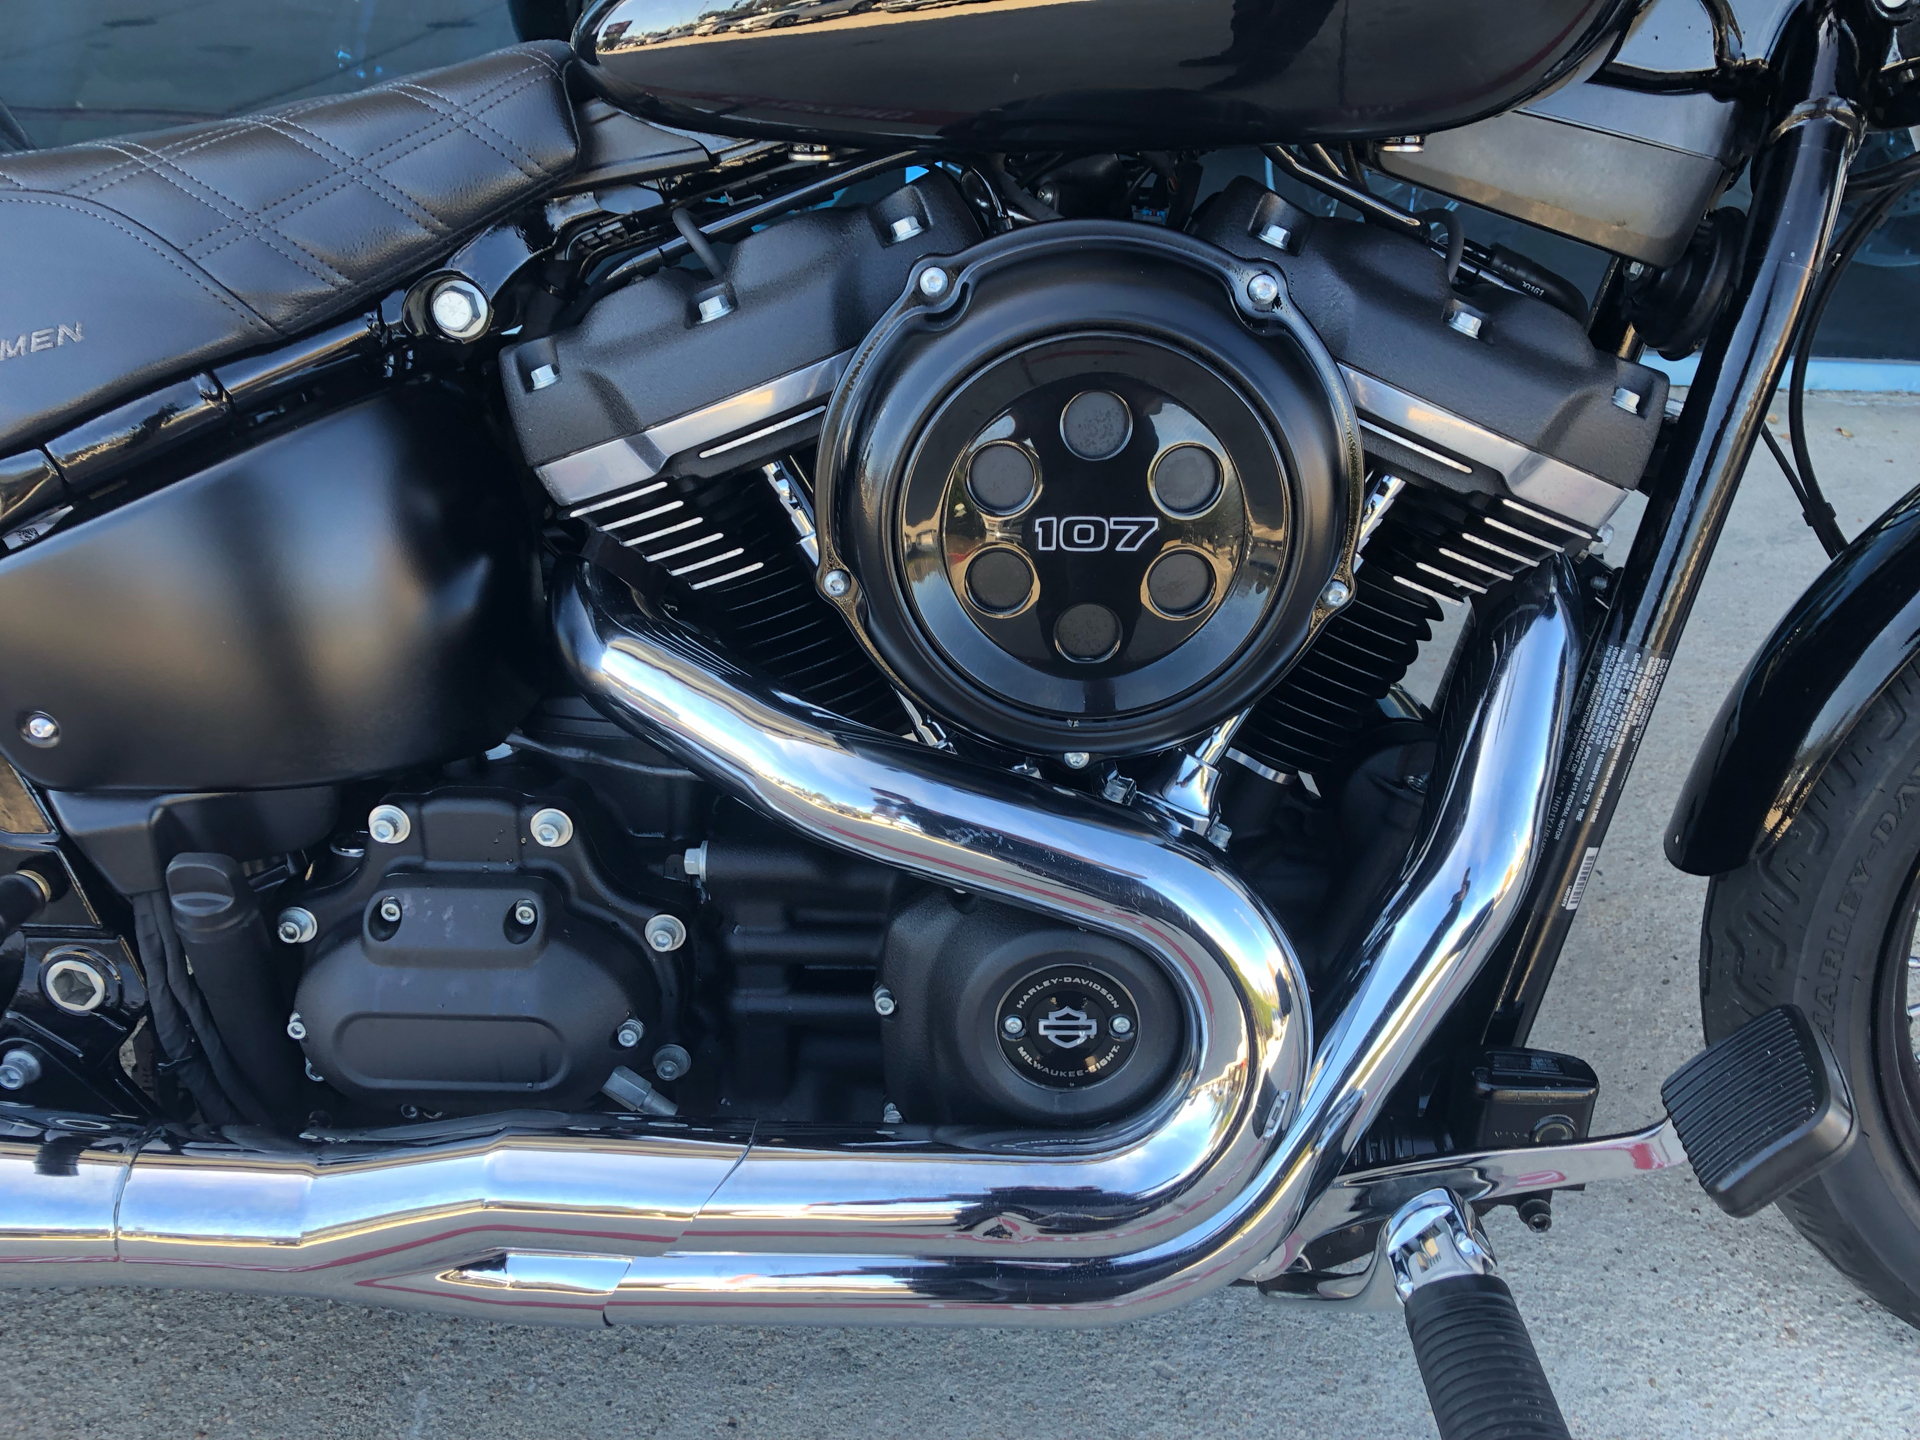 2019 Harley-Davidson Street Bob® in Temecula, California - Photo 4